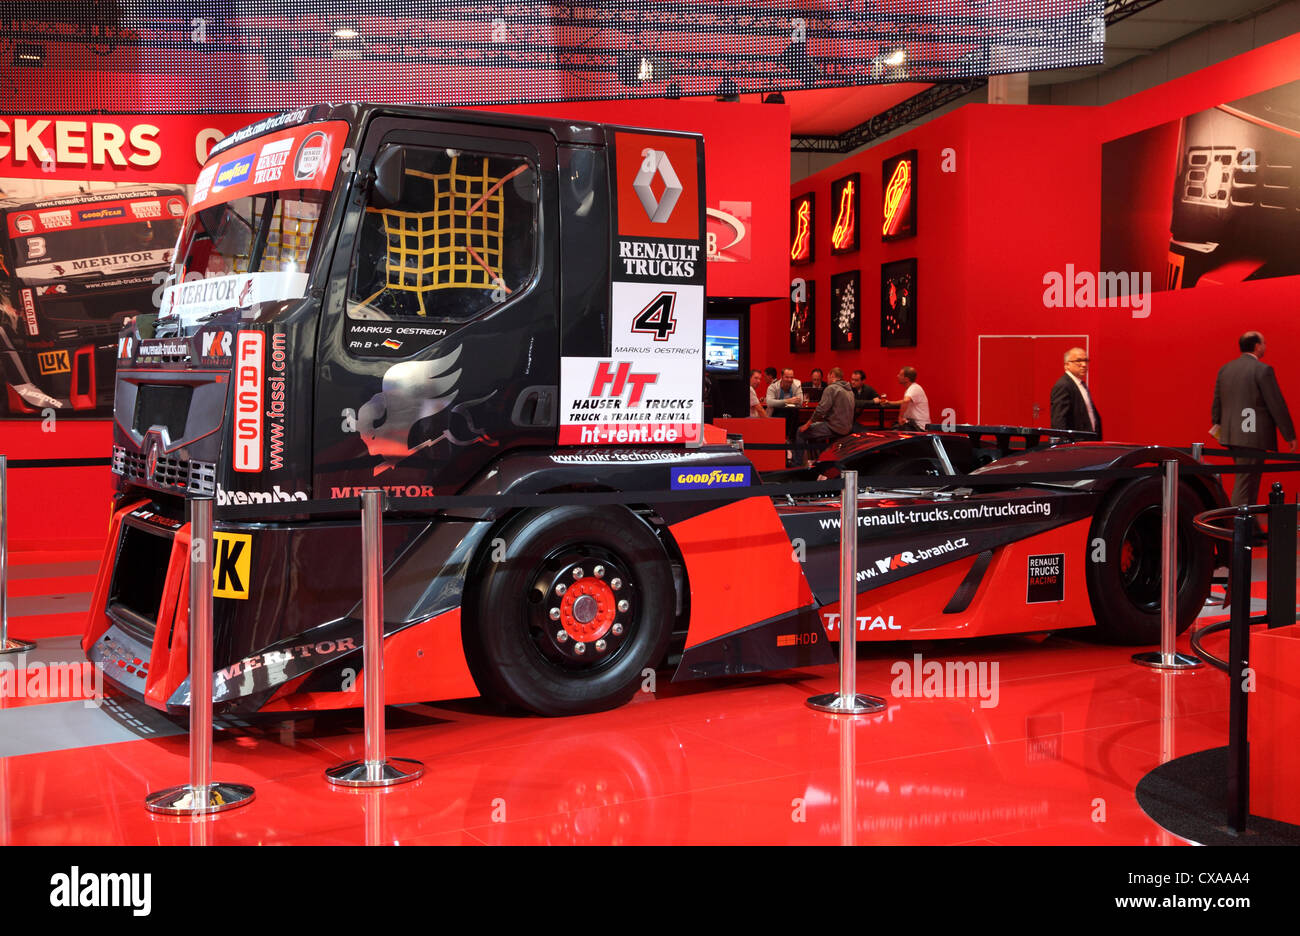 Truck lorry race racing -Fotos und -Bildmaterial in hoher Auflösung – Alamy